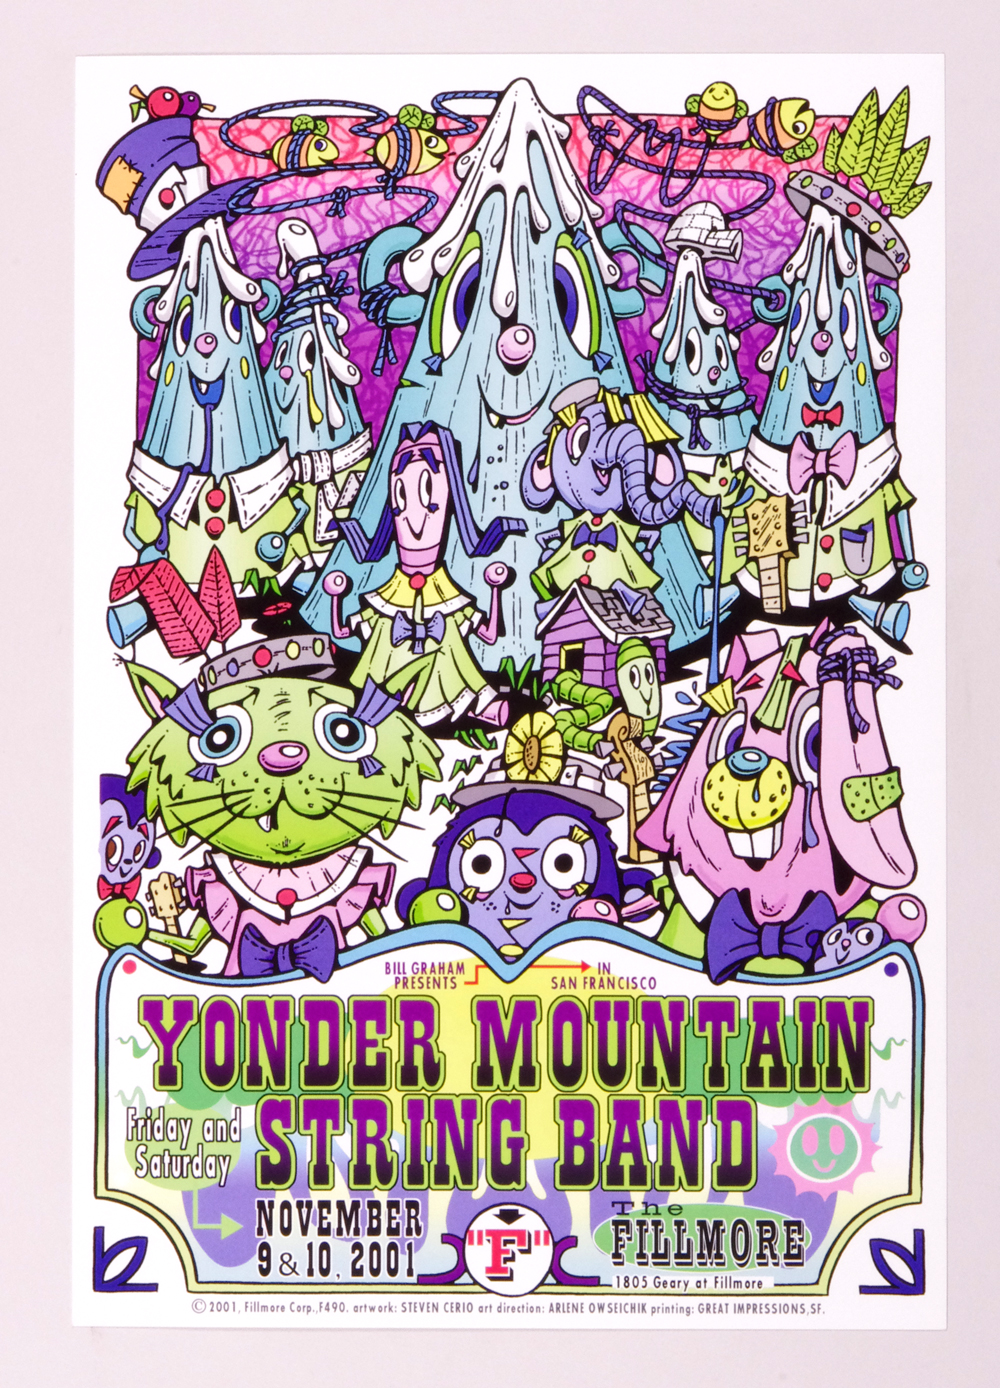 Yonder Mountain String Band Poster 2001 Nov 9 New Fillmore San Francisco